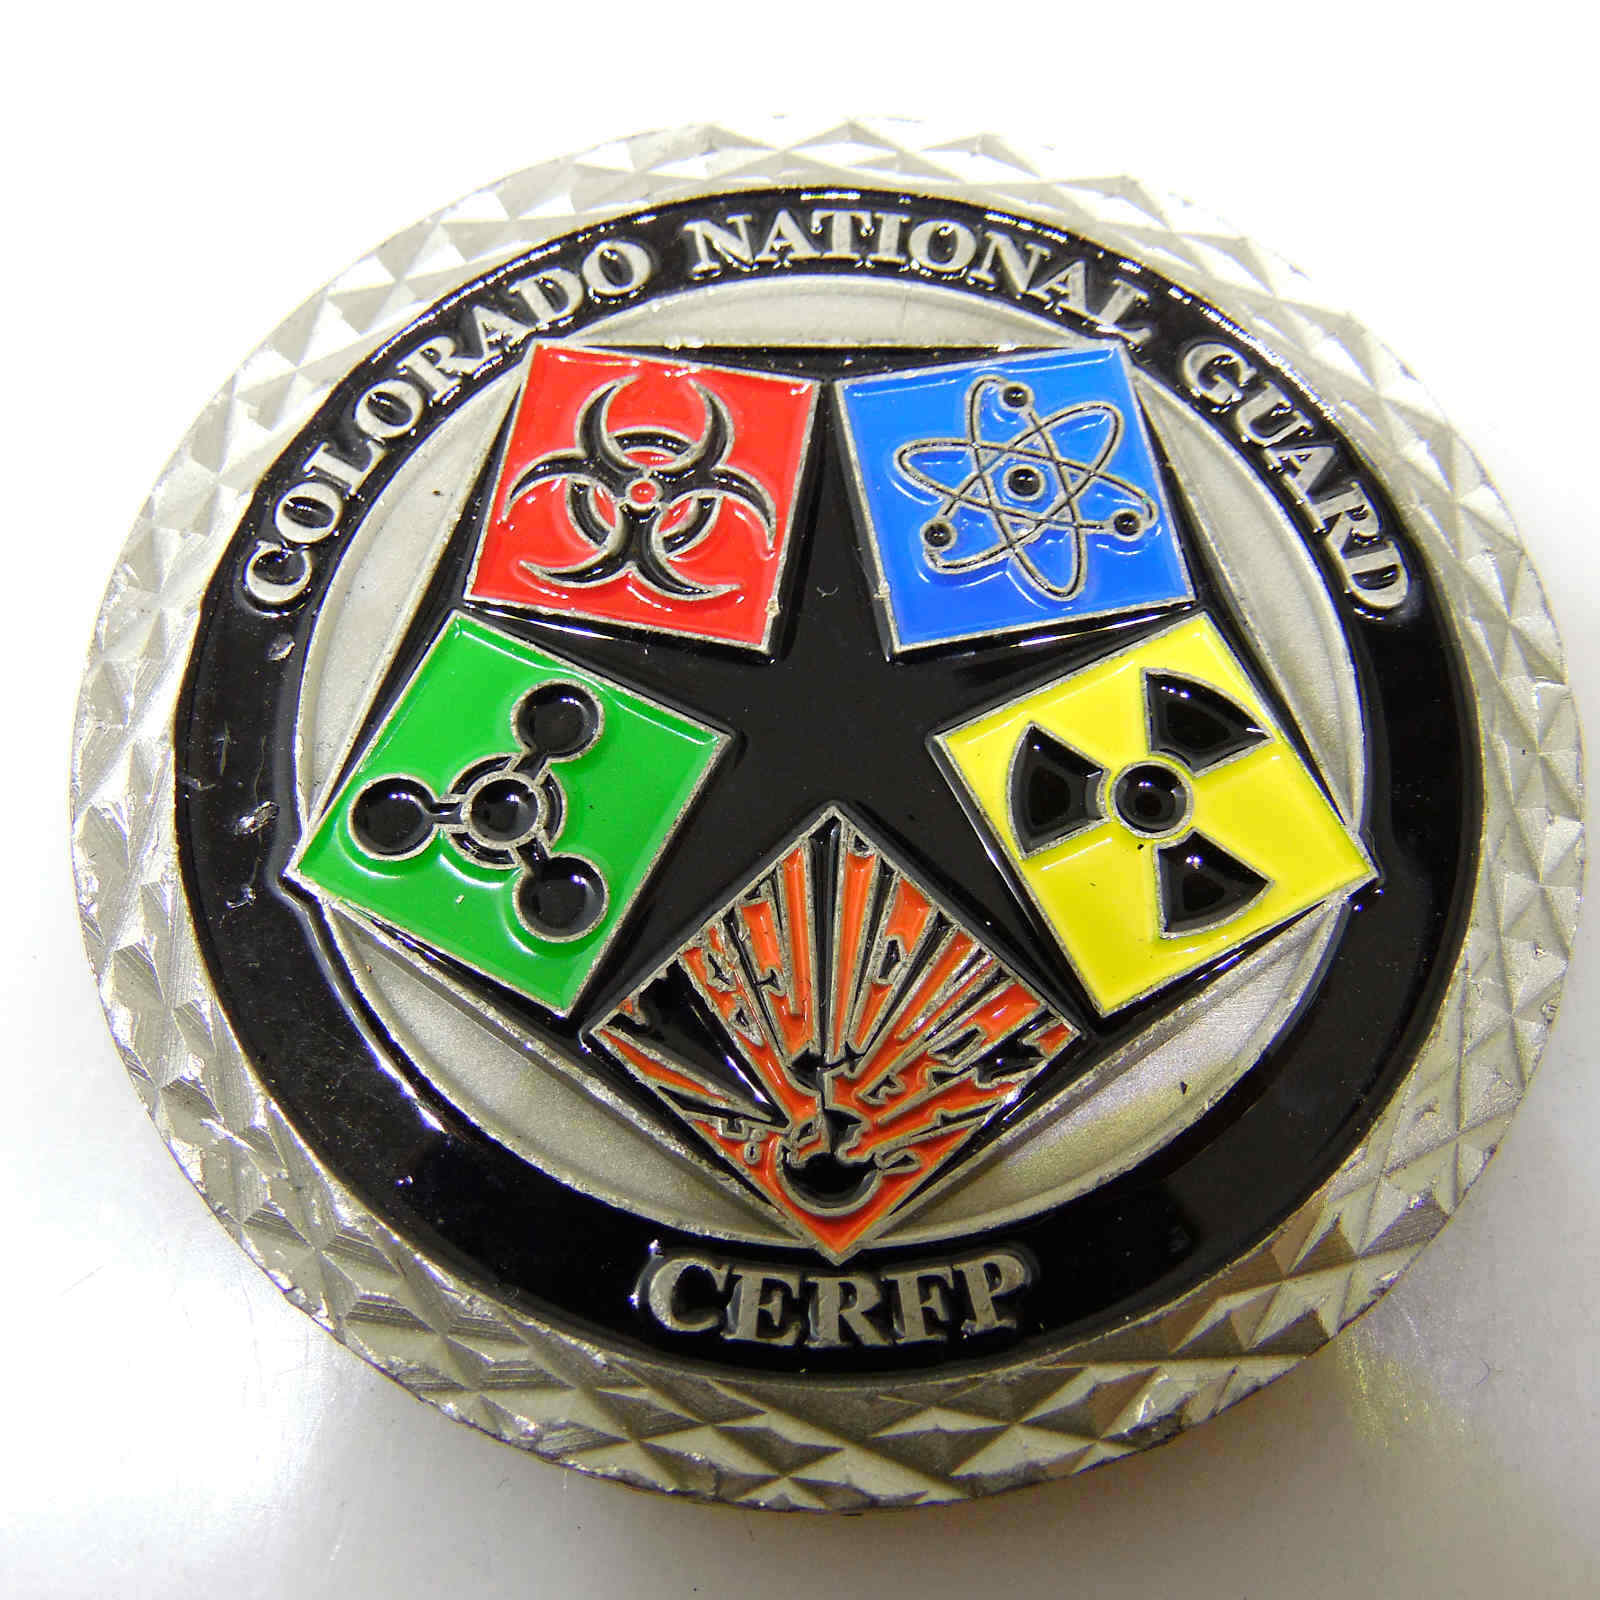 COLORADO NATIONAL GUARD CERFP CHALLENGE COIN